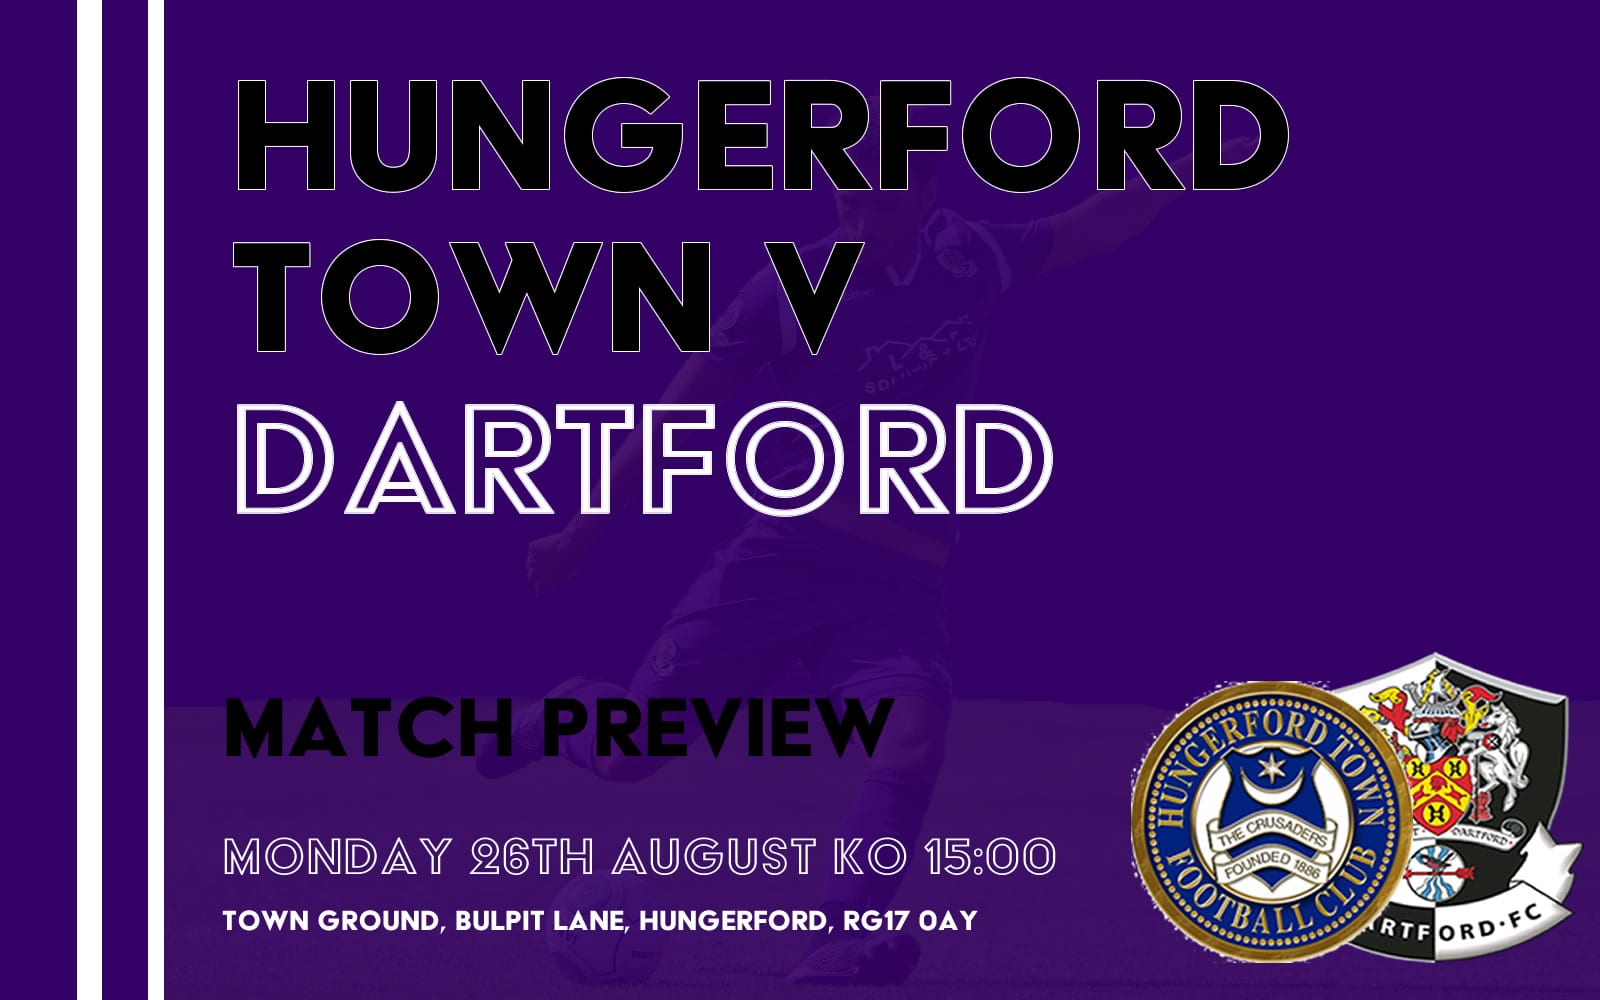 Hungerford Town v Dartford Match PREVIEW